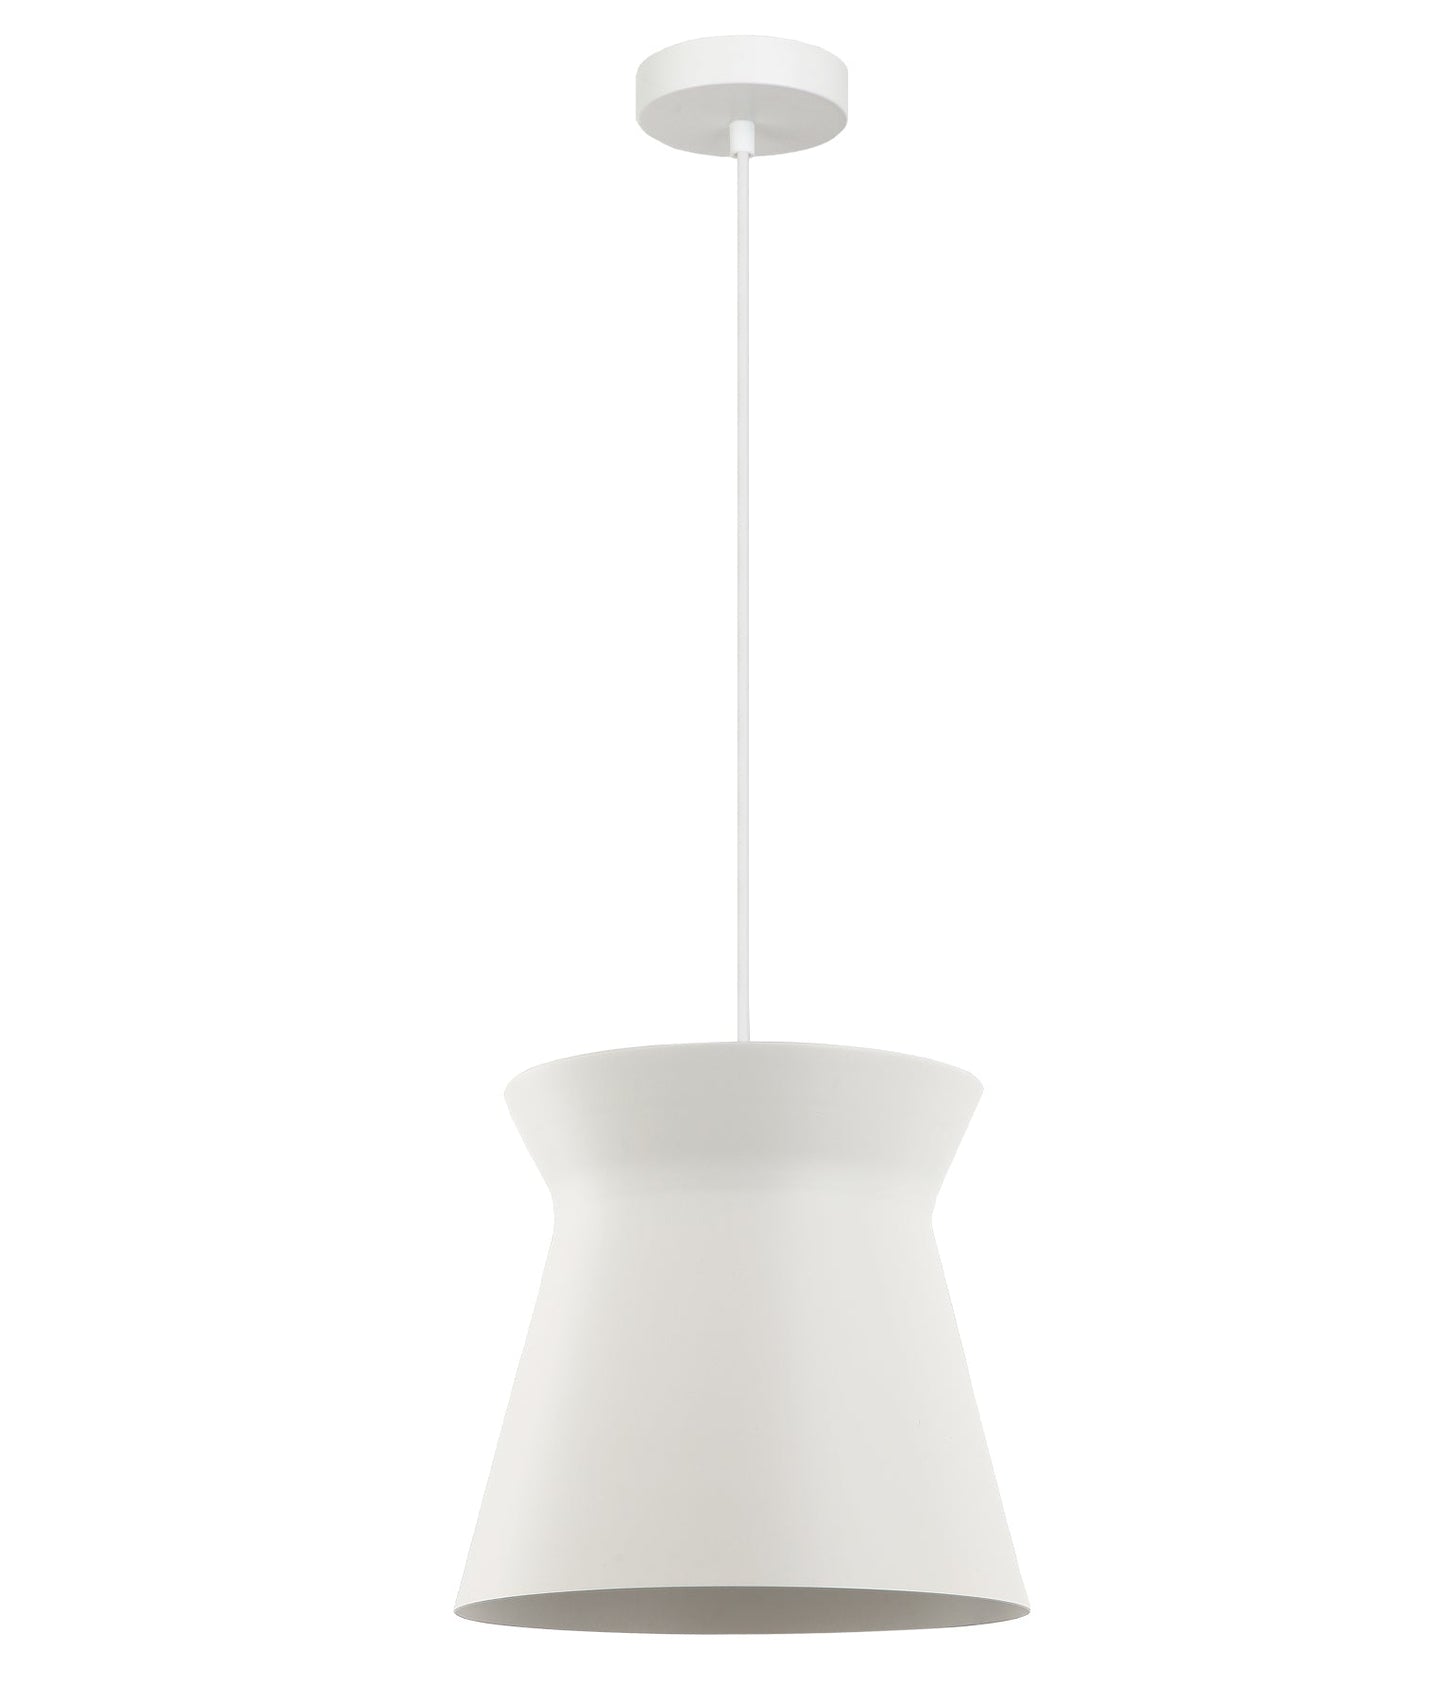 DIABLO: Modern Scandinavian Interior Cone Flat Top Pendant Lights